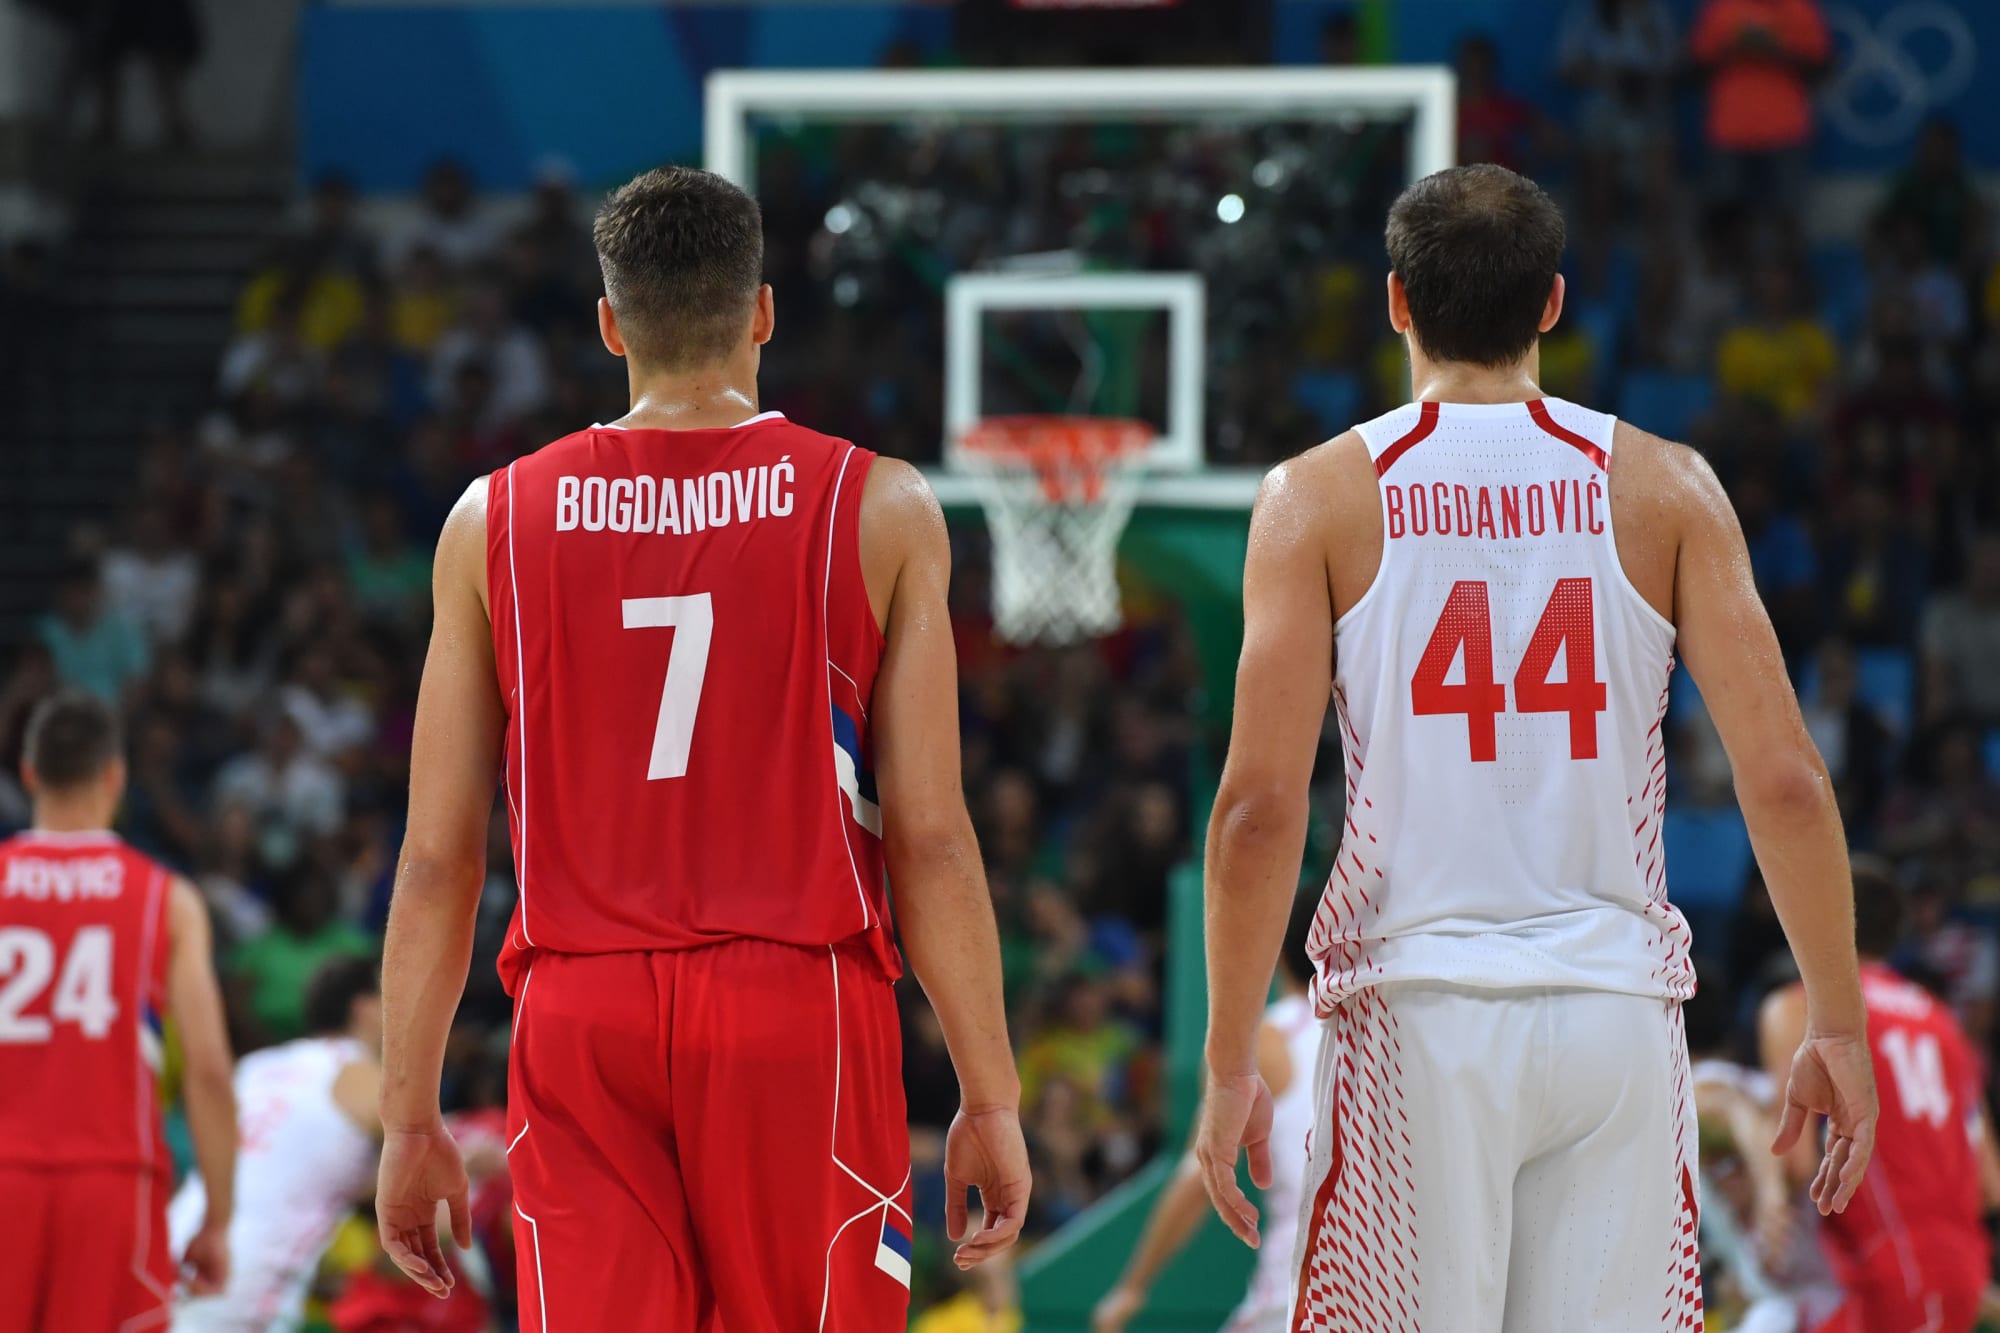 Serbia's Bogdan Bogdanovic aims for better shooting despite red